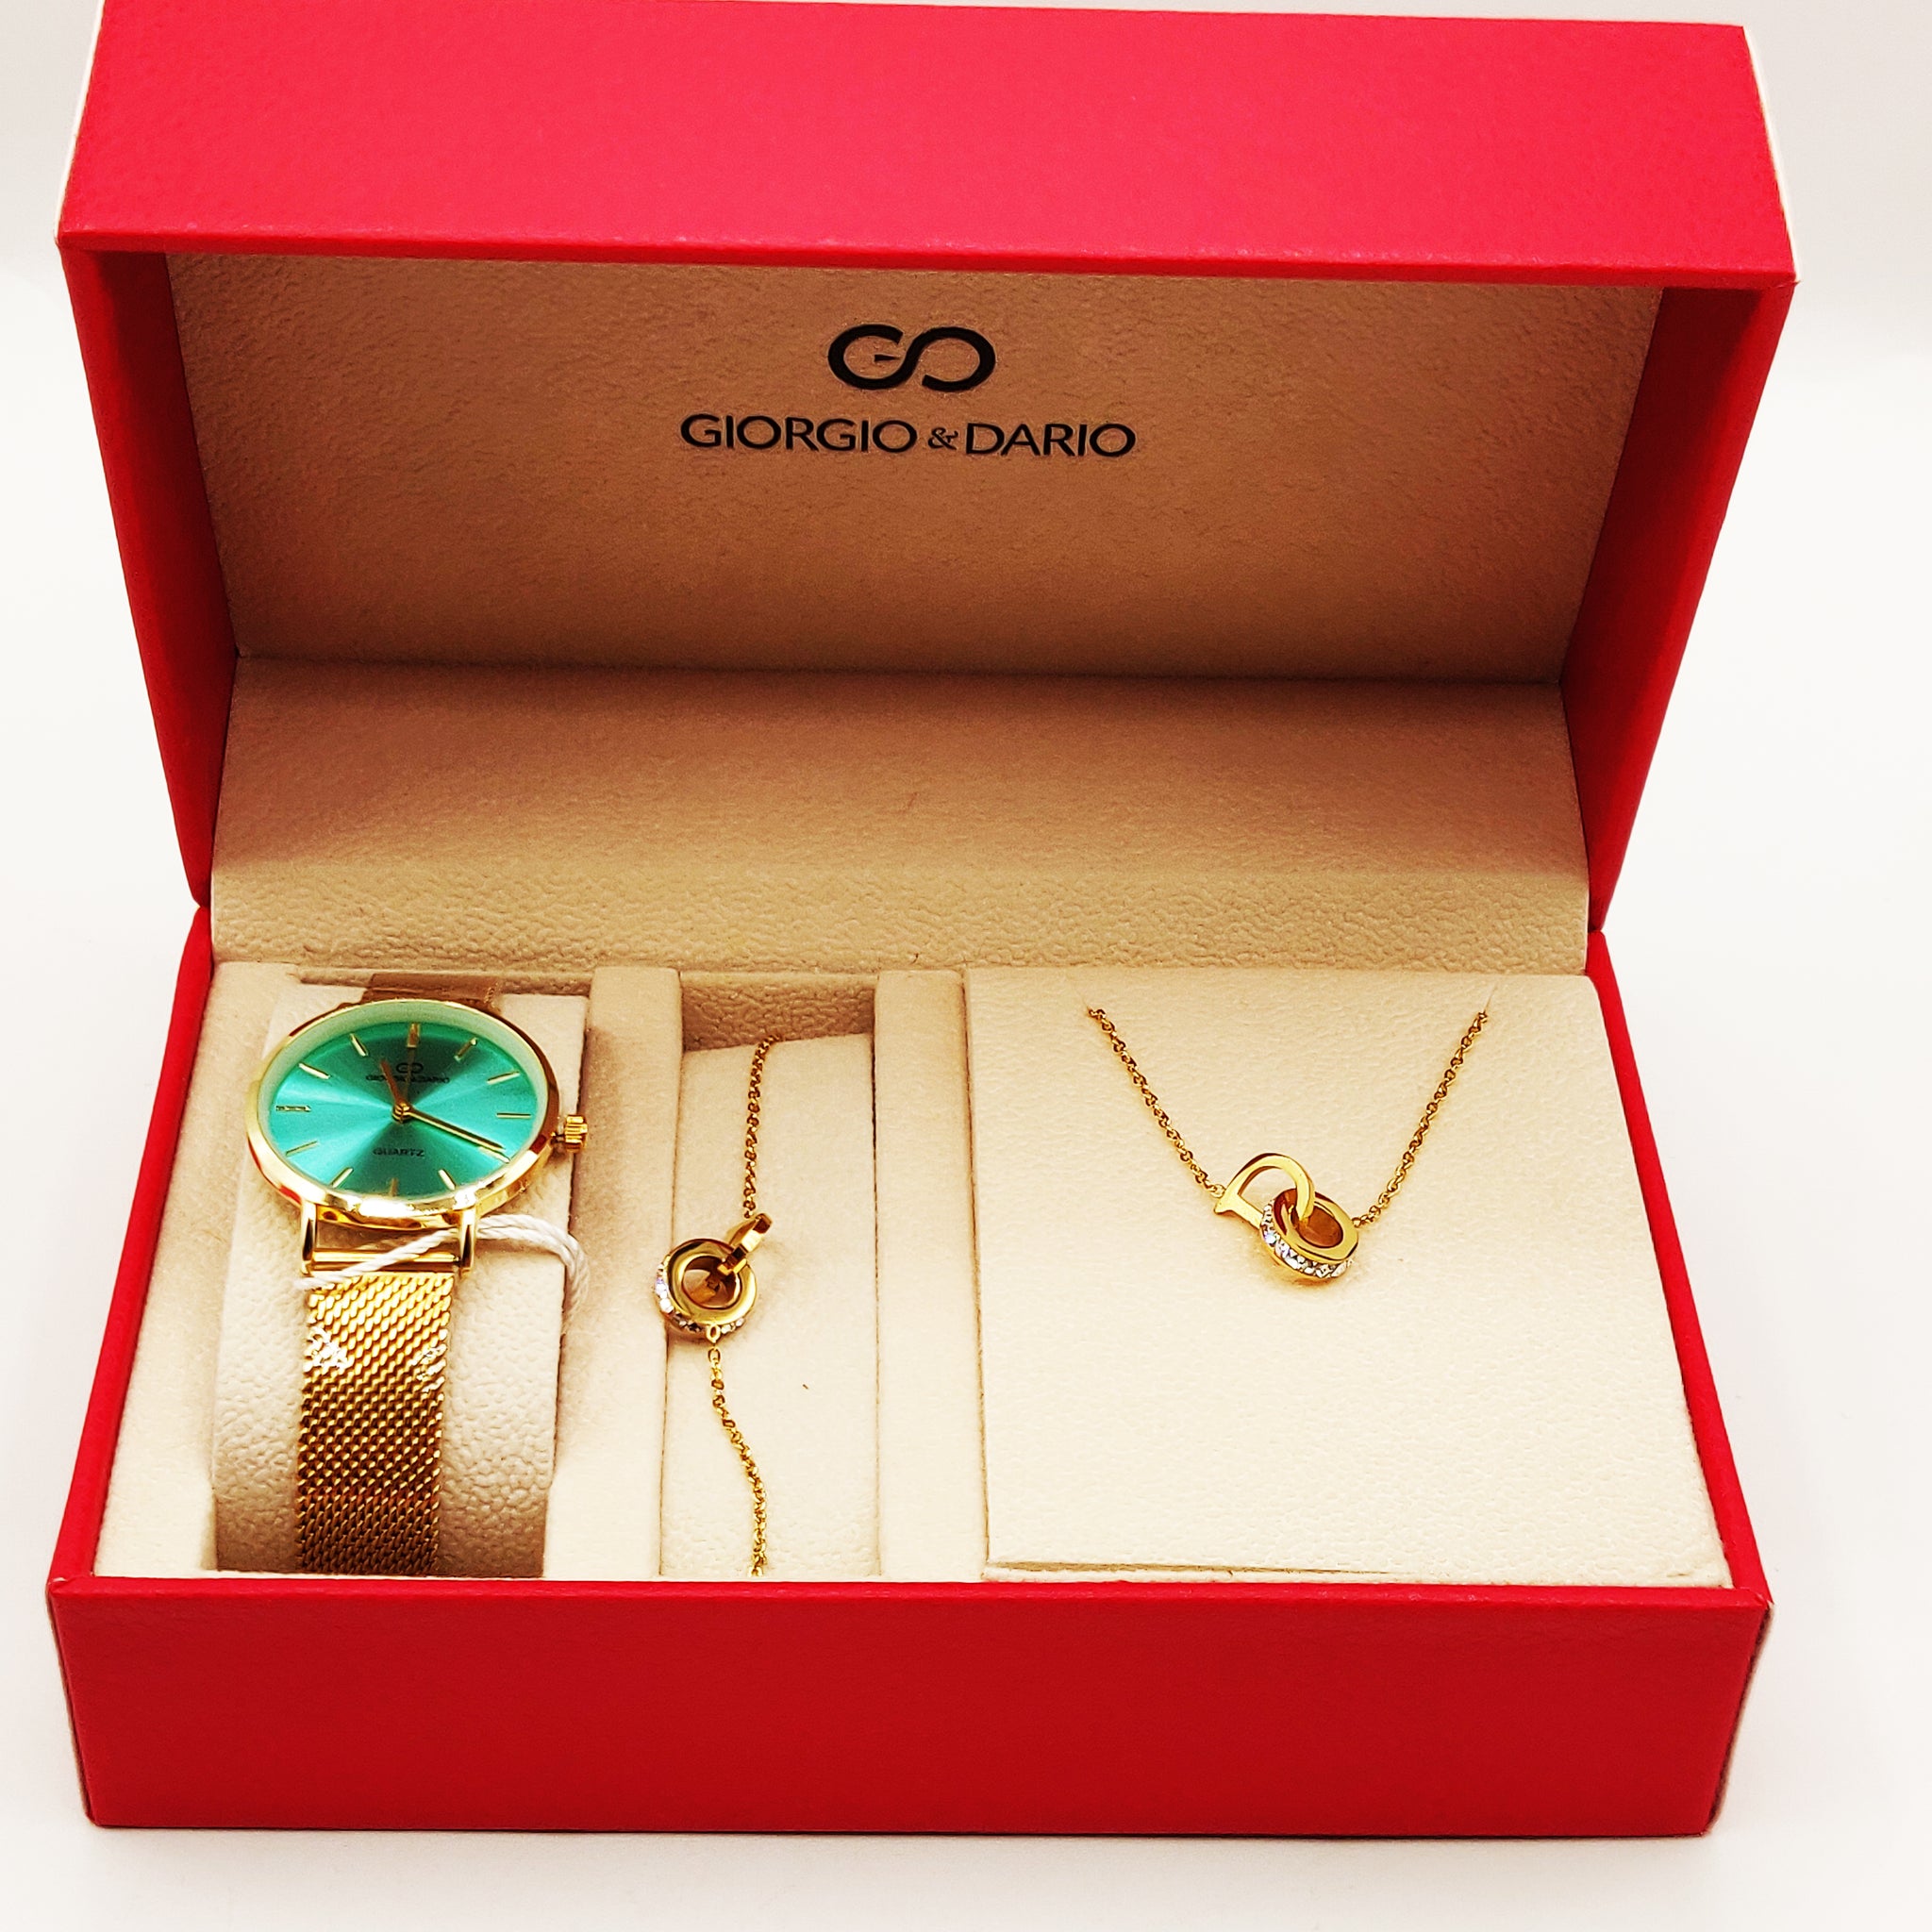 Coffret Montre Giorgio & Dario EU5604 Fond Bleu-Vert avec Collier et Bracelet D Luxe